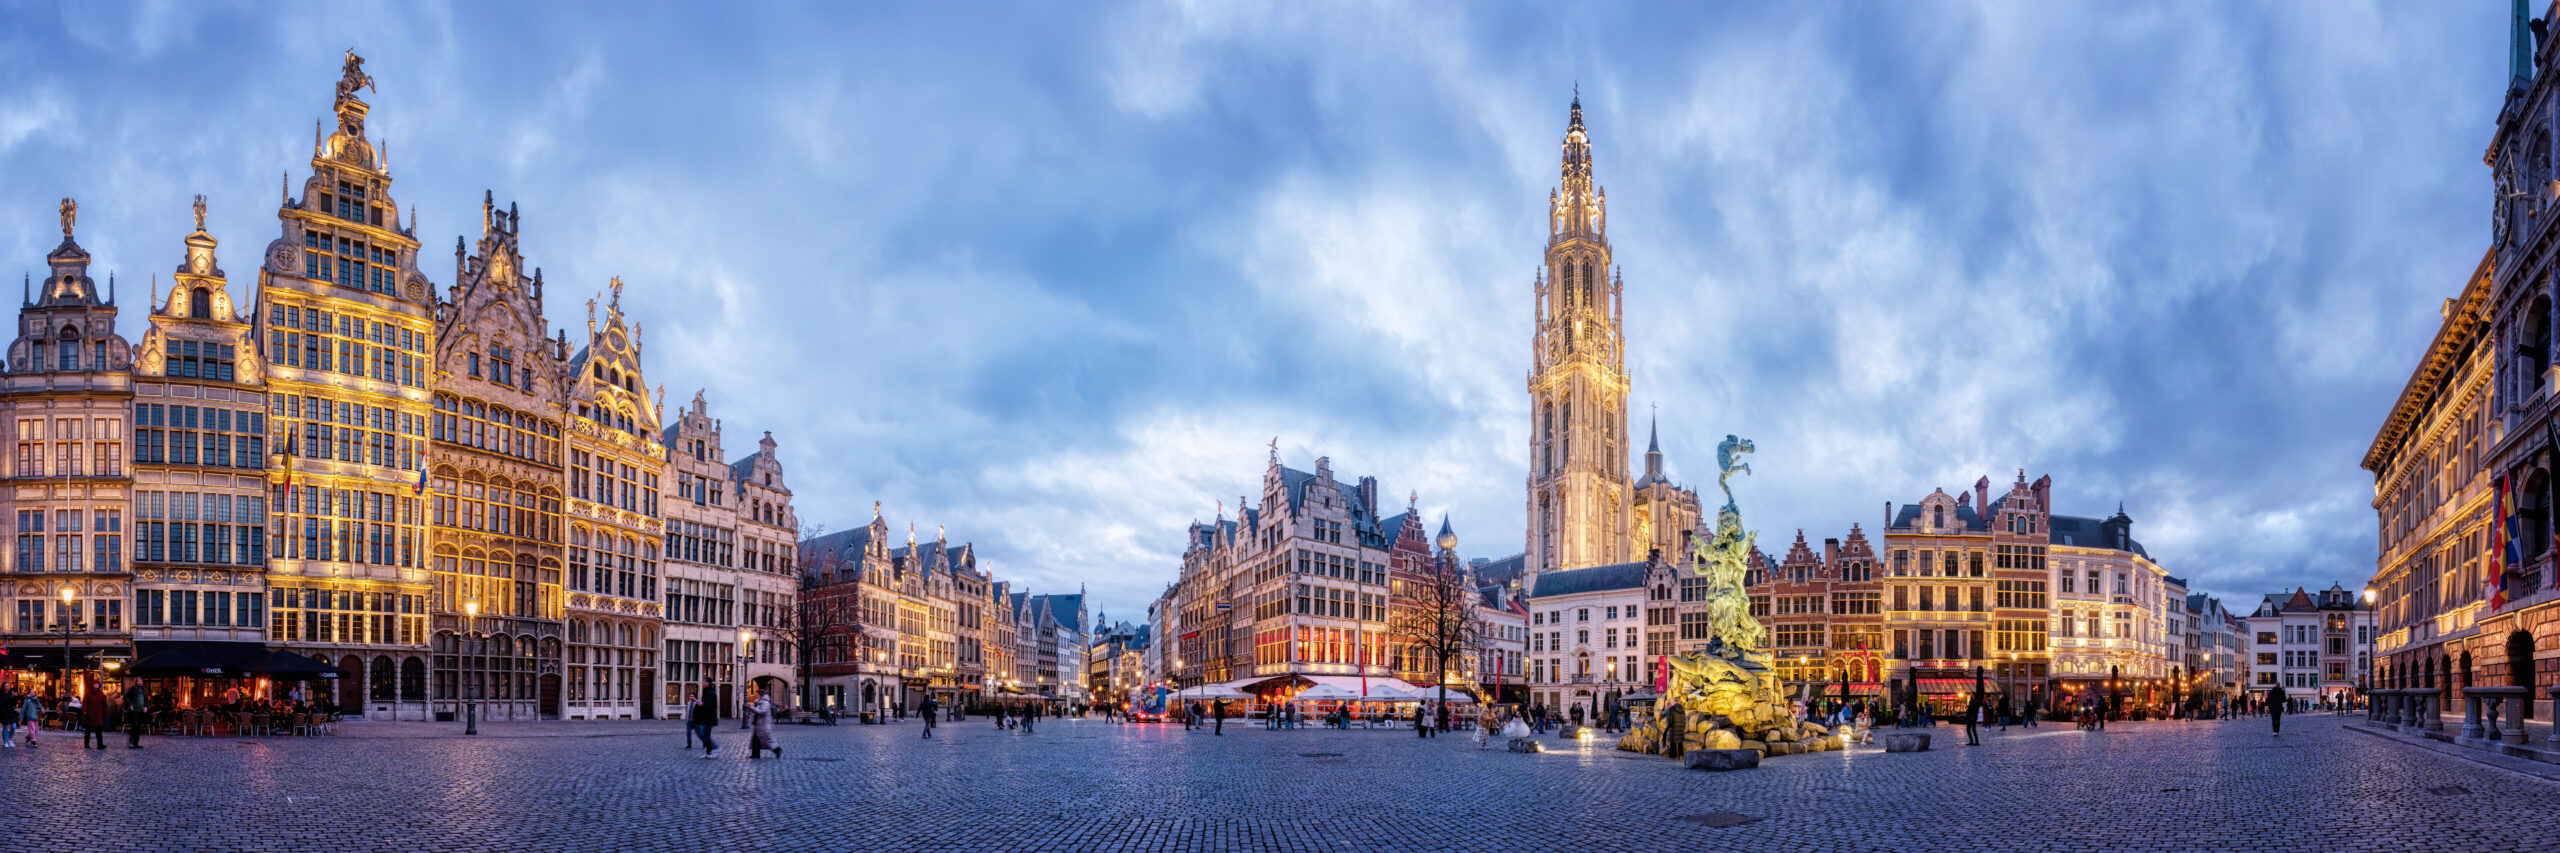 Antwerp panorama city view market square